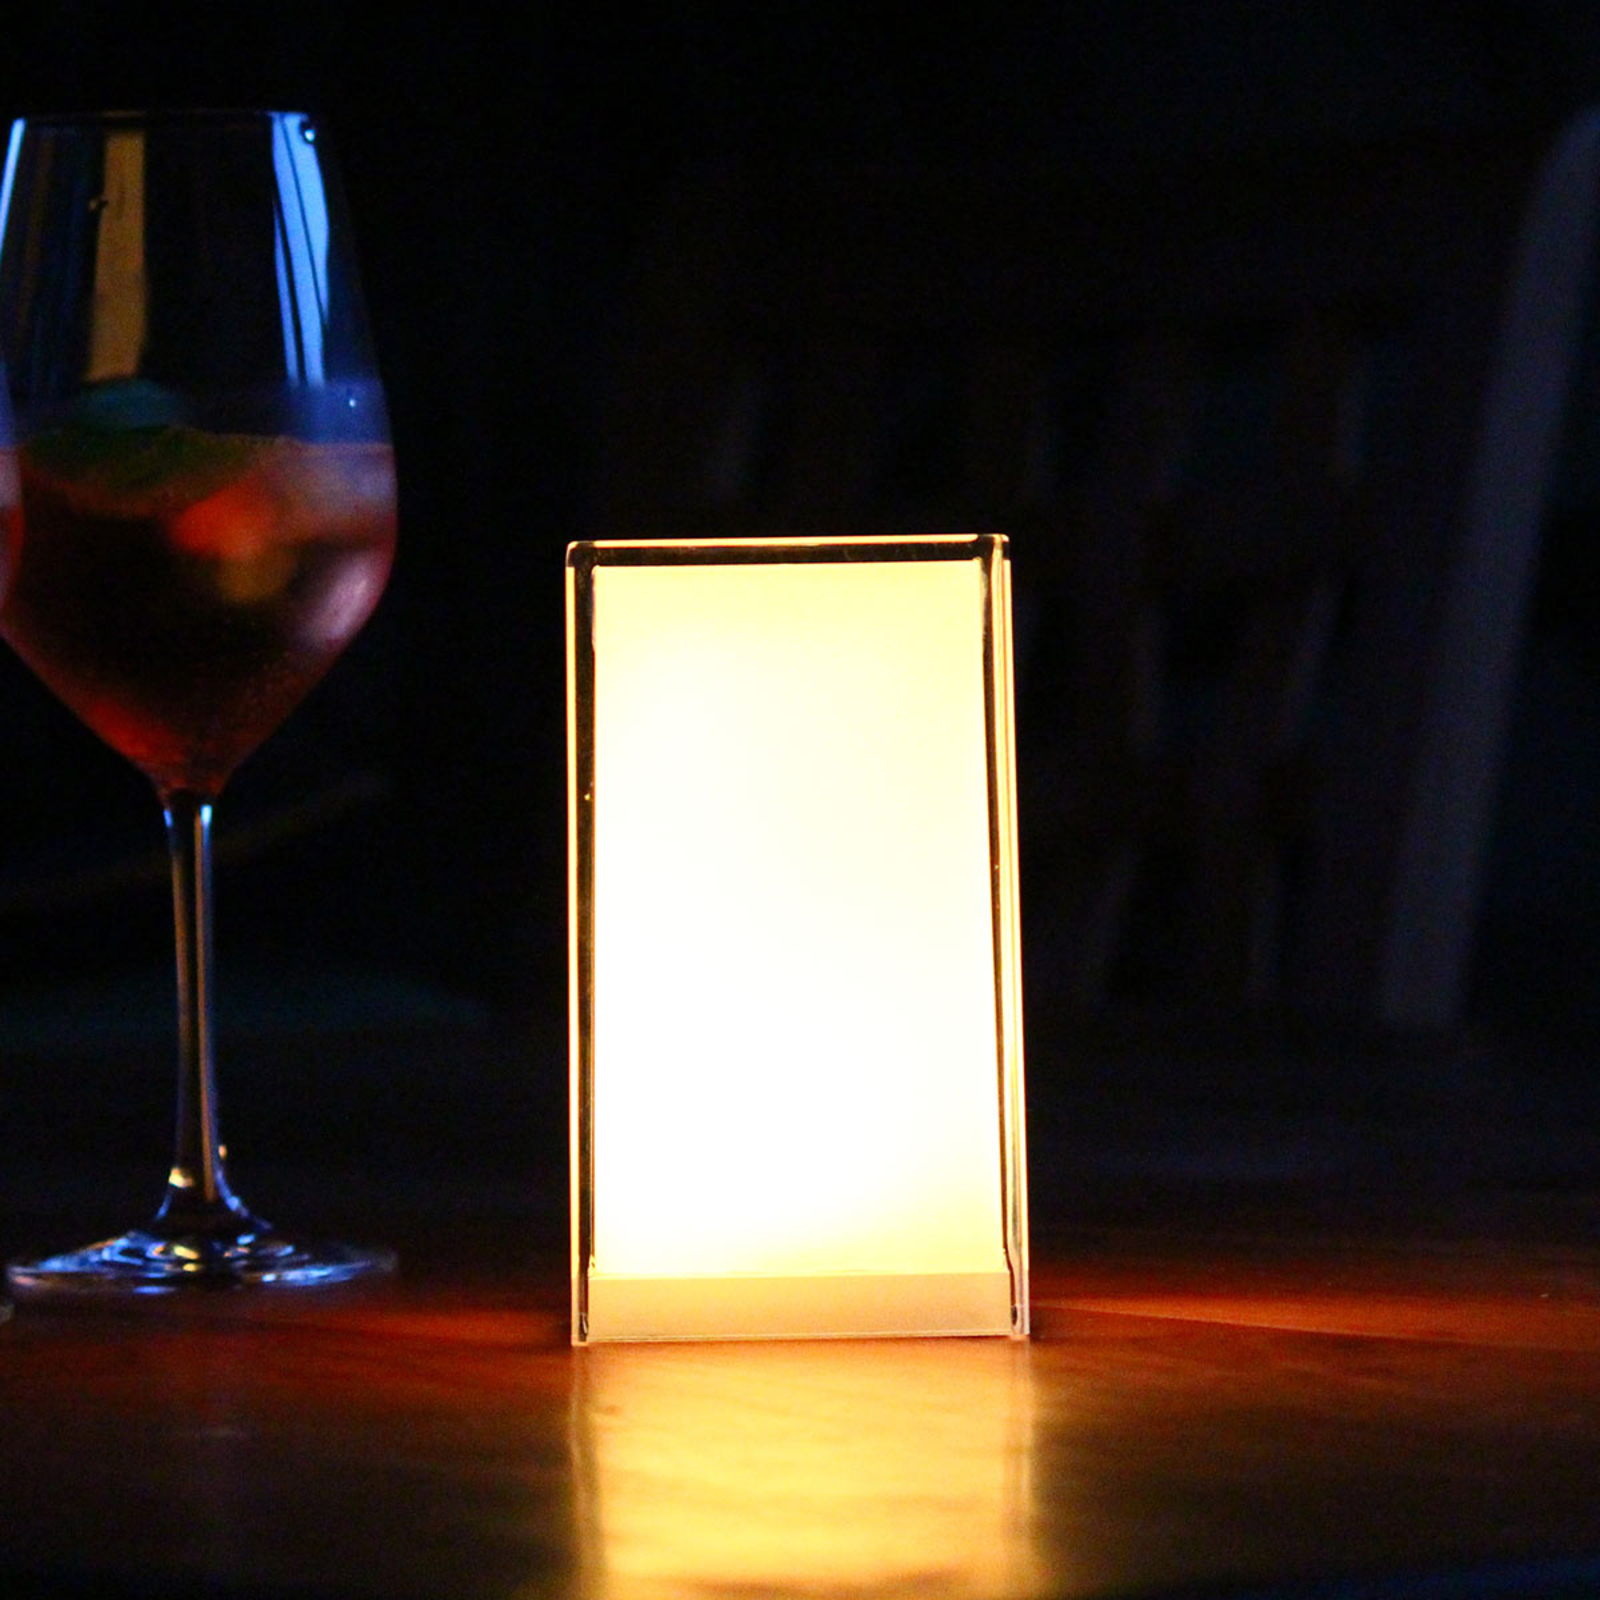 Lampada da tavolo portatile Cub, controllabile tramite App, RGBW